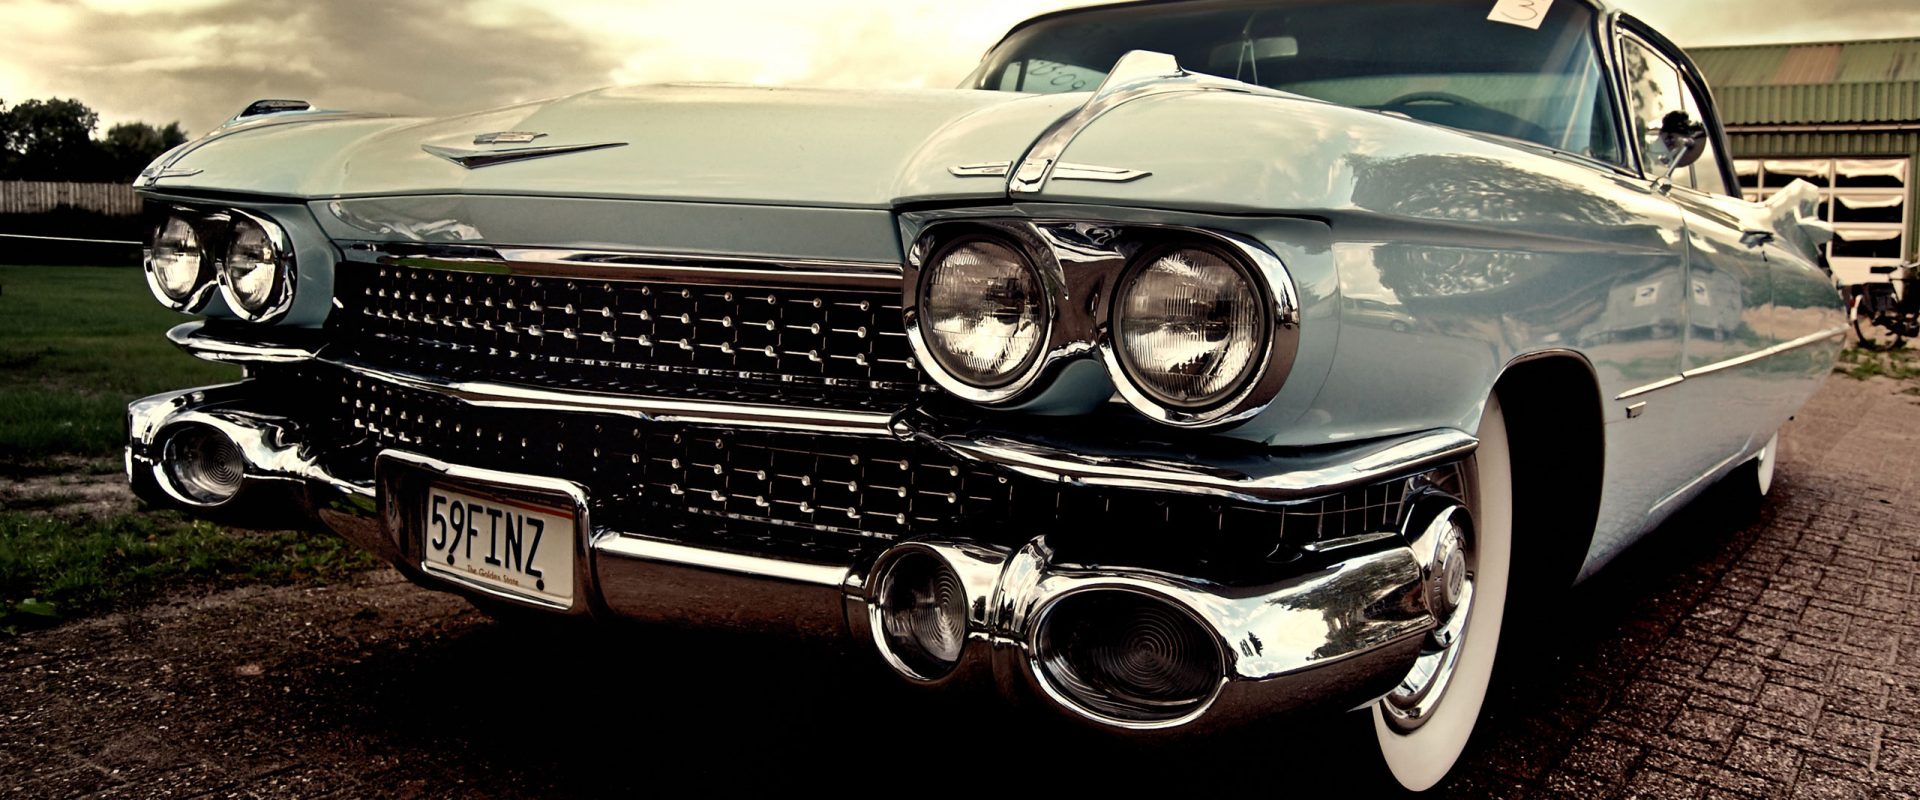 4 modelos históricos da Cadillac